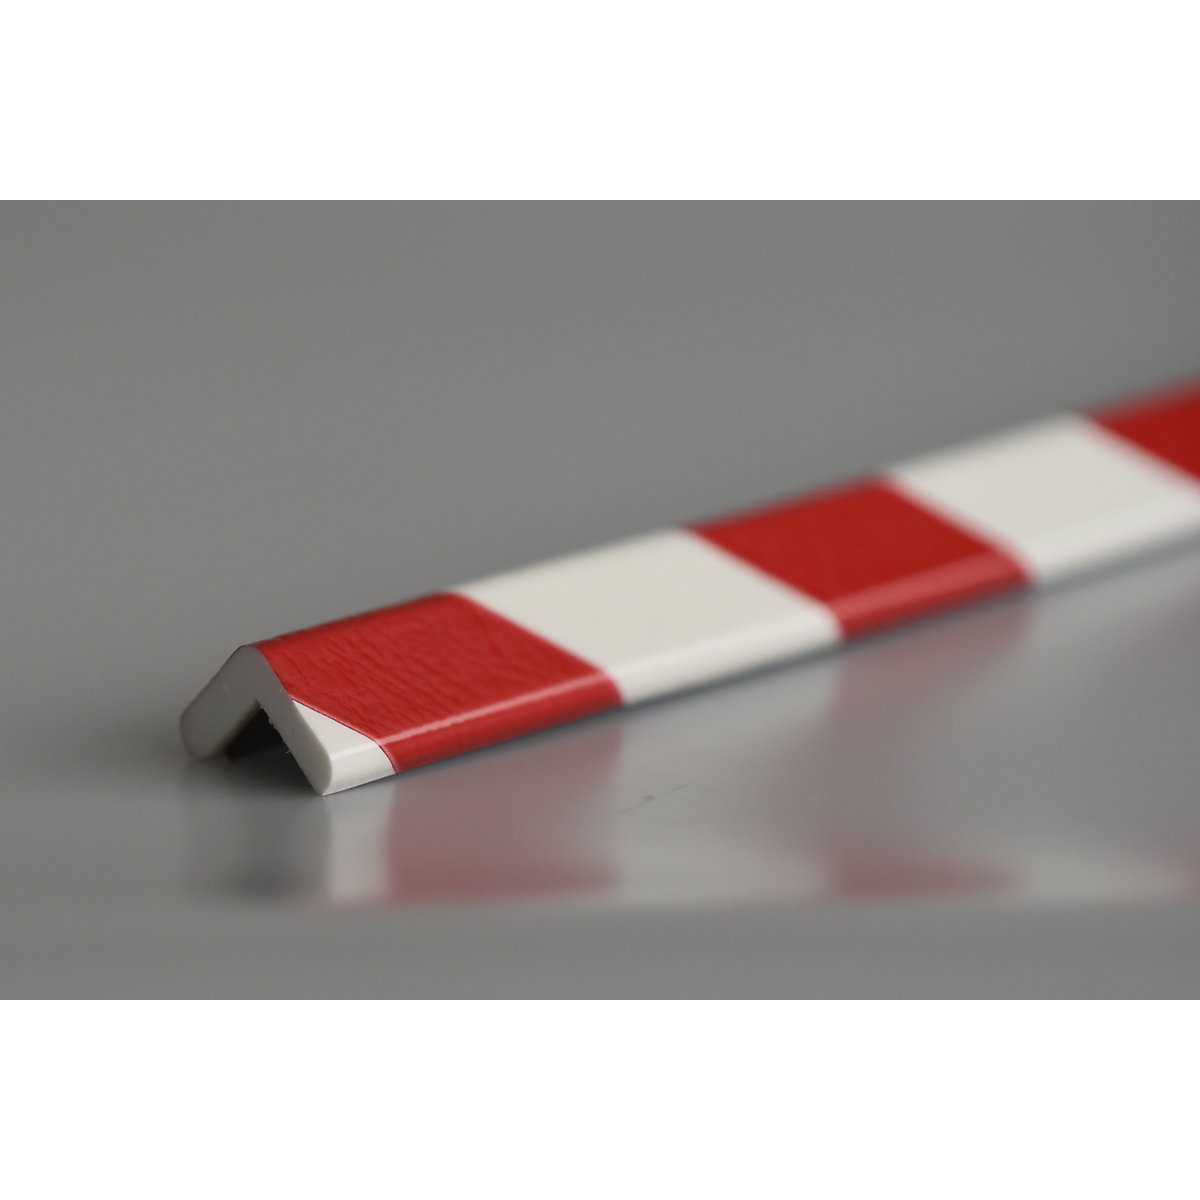 Knuffi®-hoekbescherming – SHG, type E, stuk van 1 m, rood/wit, magneethoudend-25